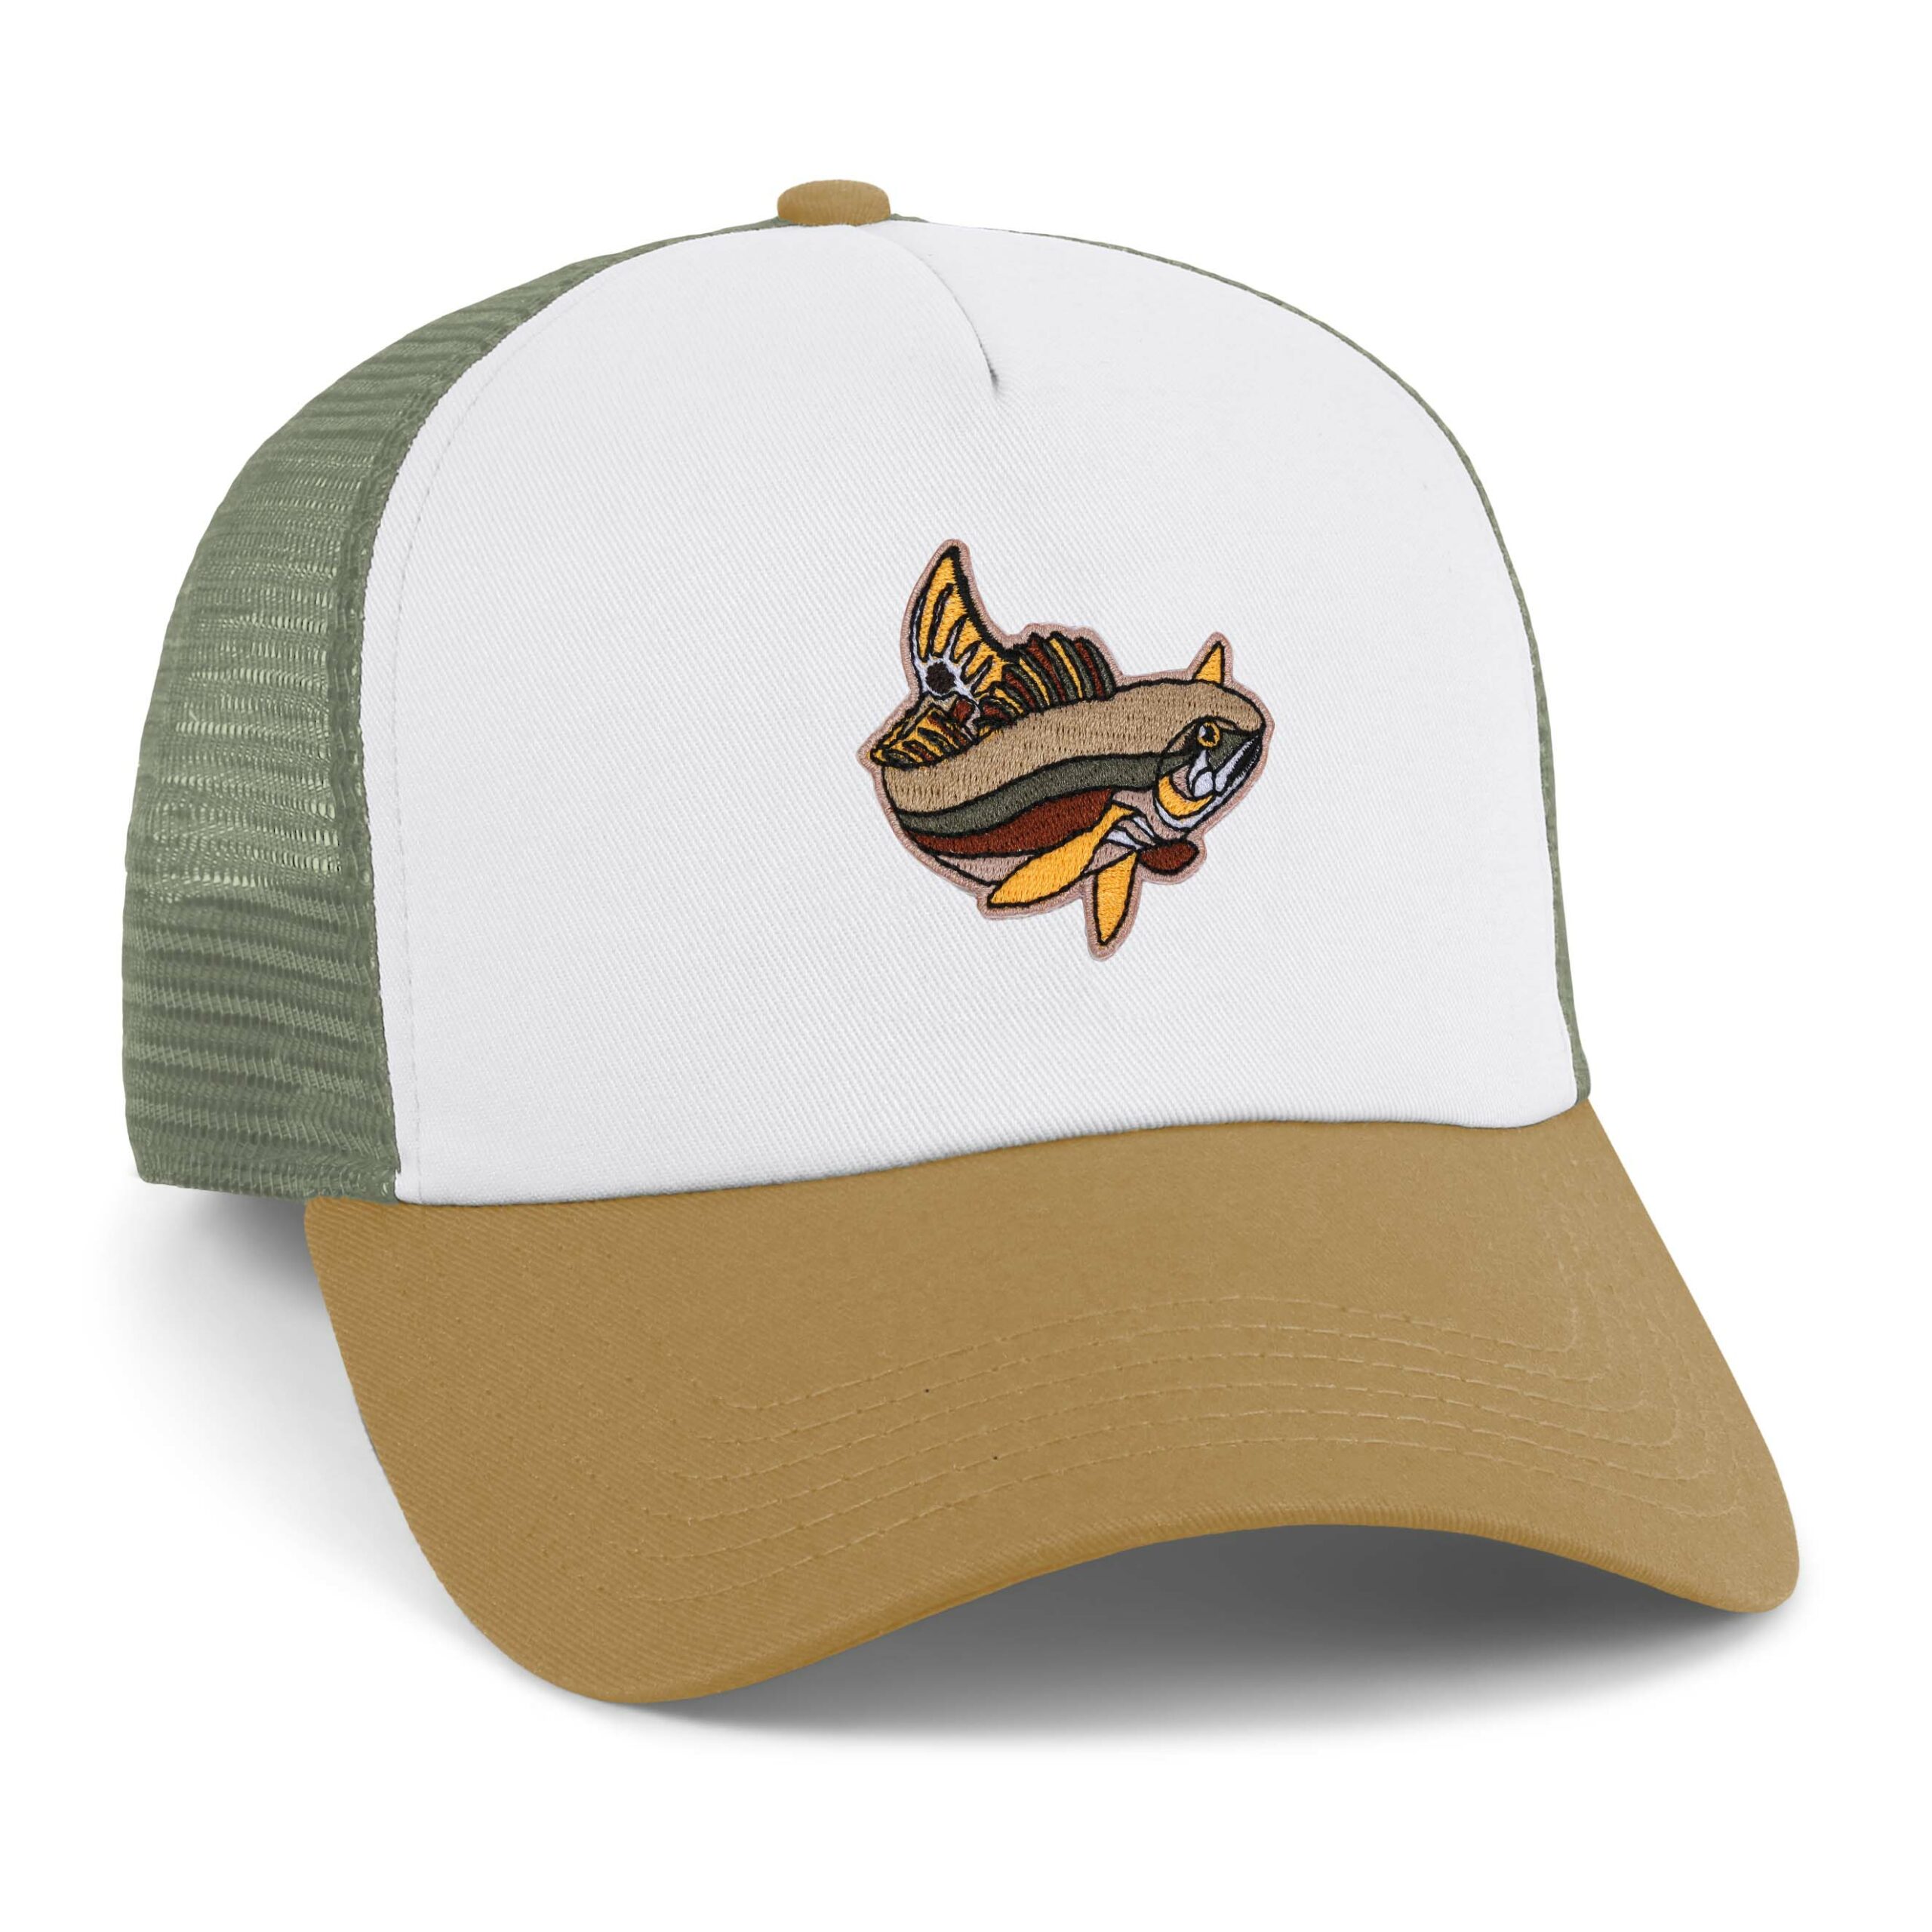 9 Fishing Hats ideas  fishing hat, hats, outdoor cap